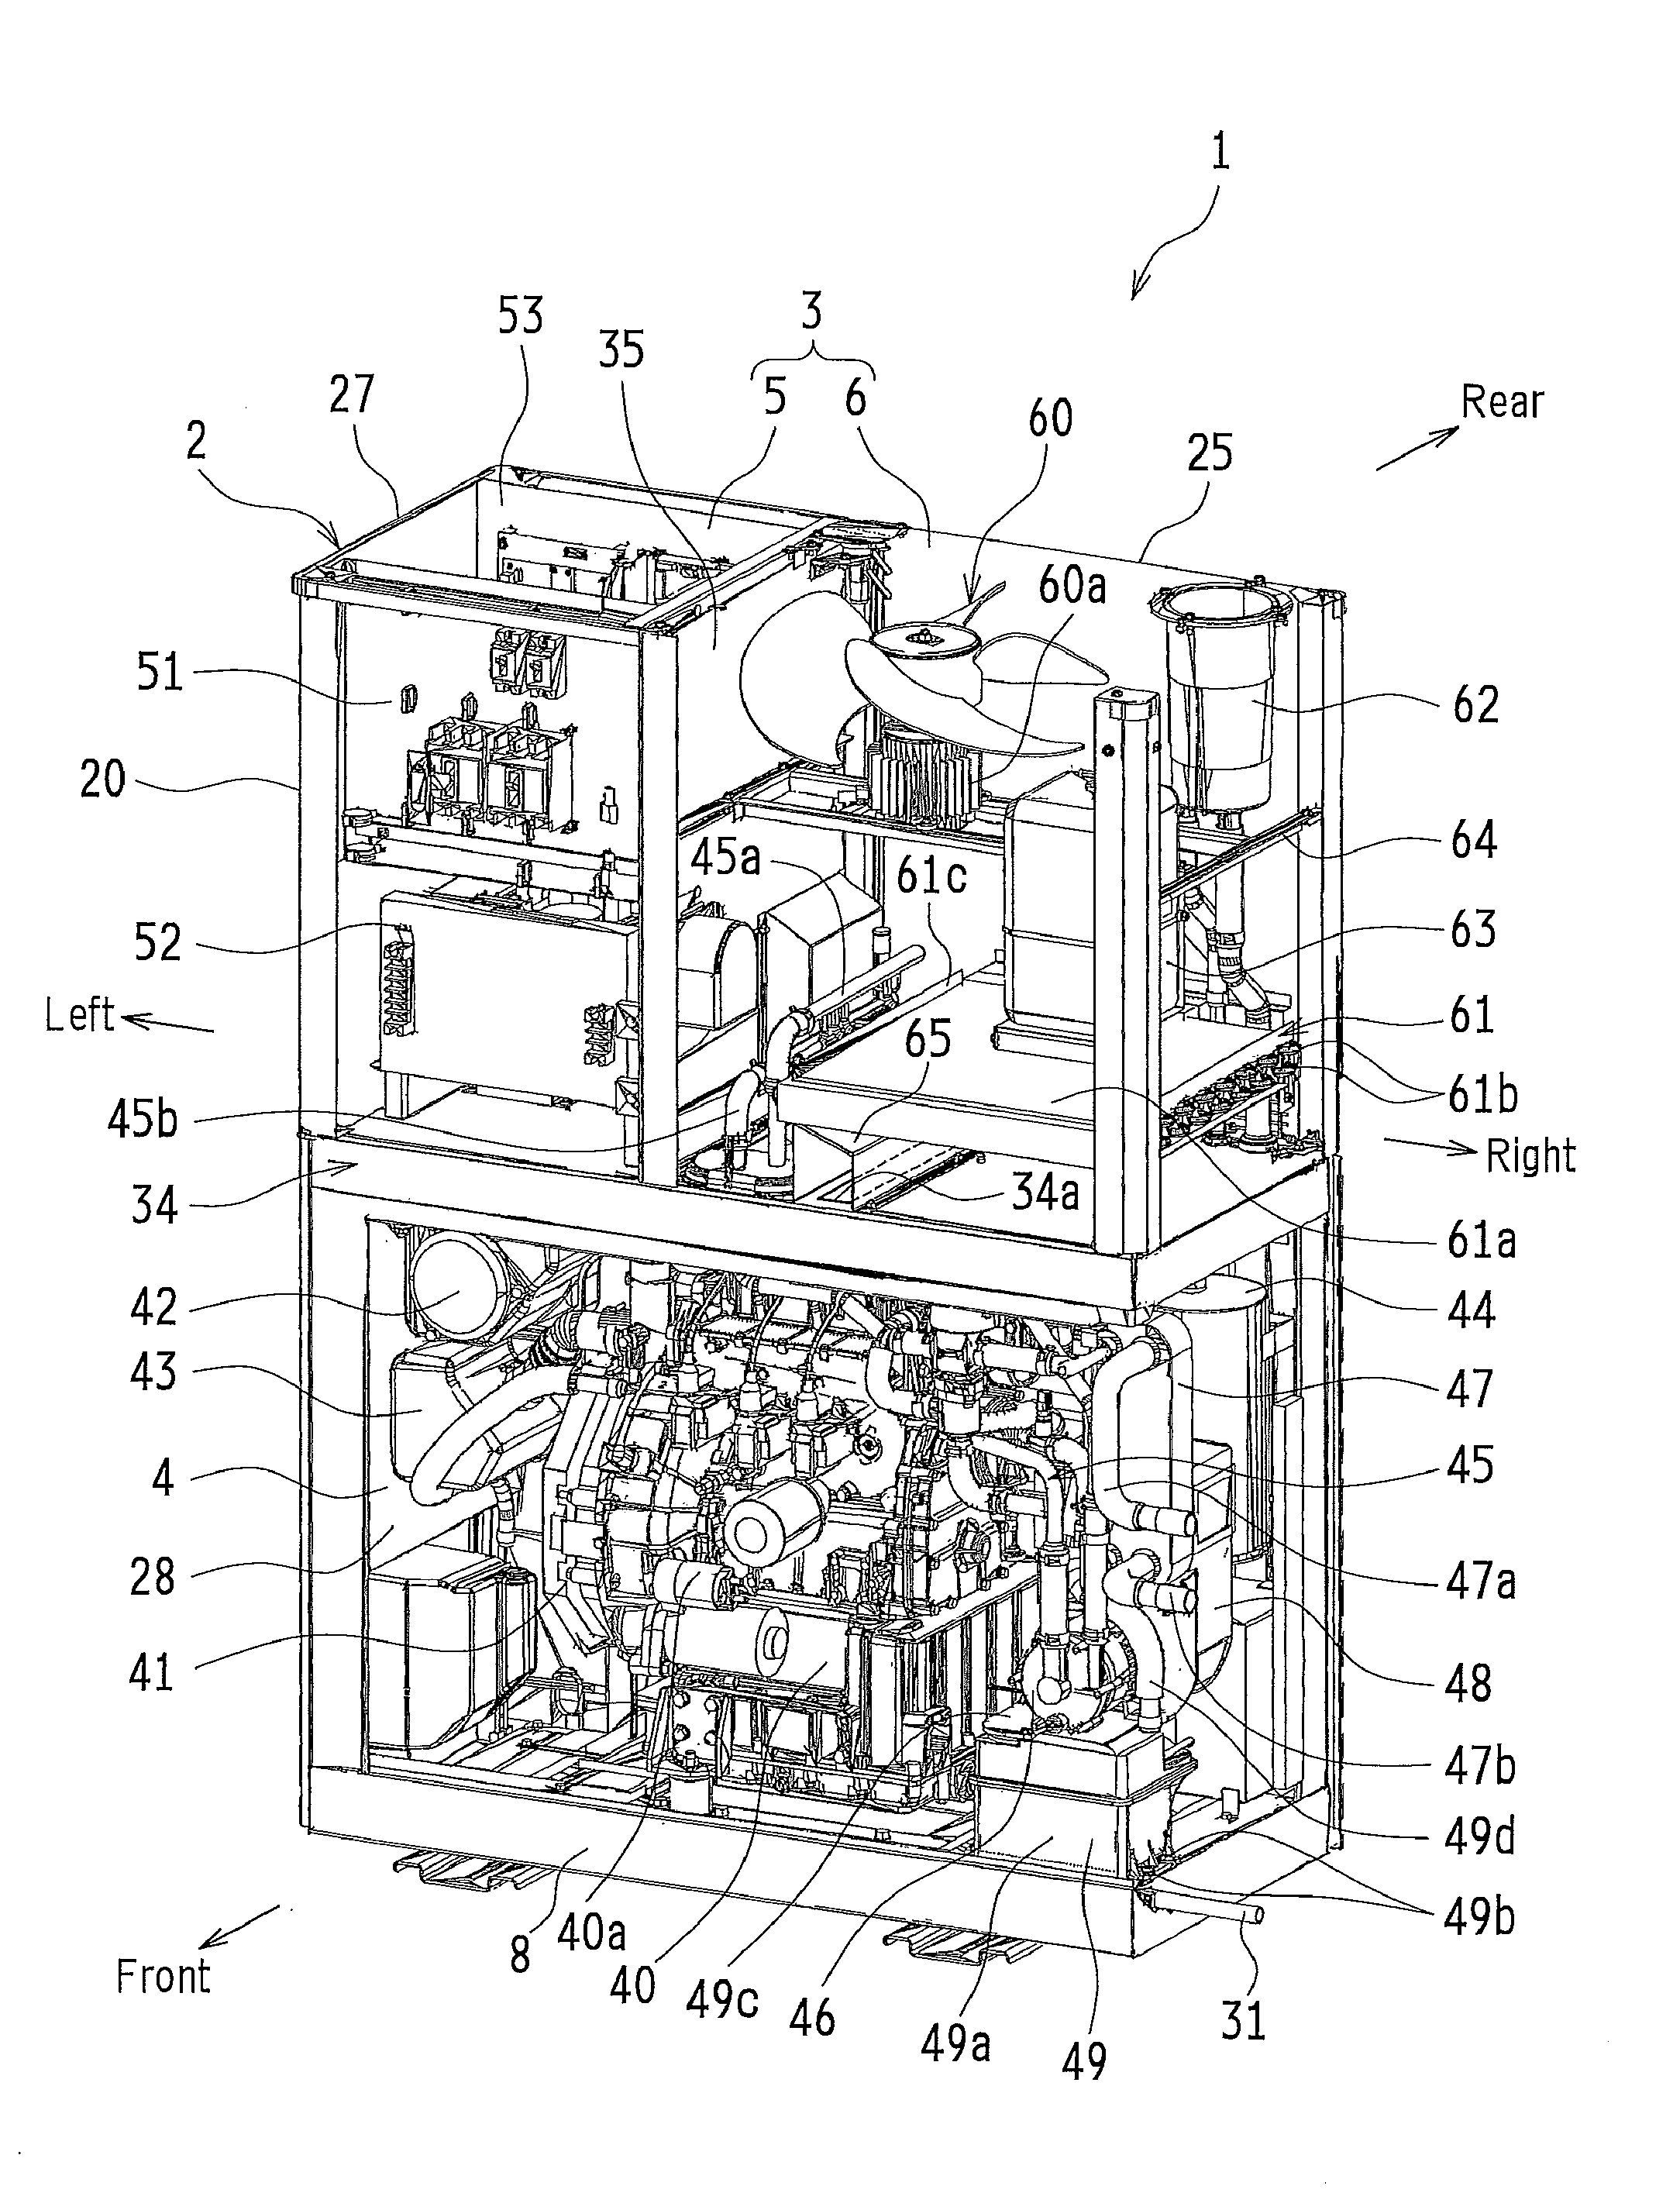 Engine system